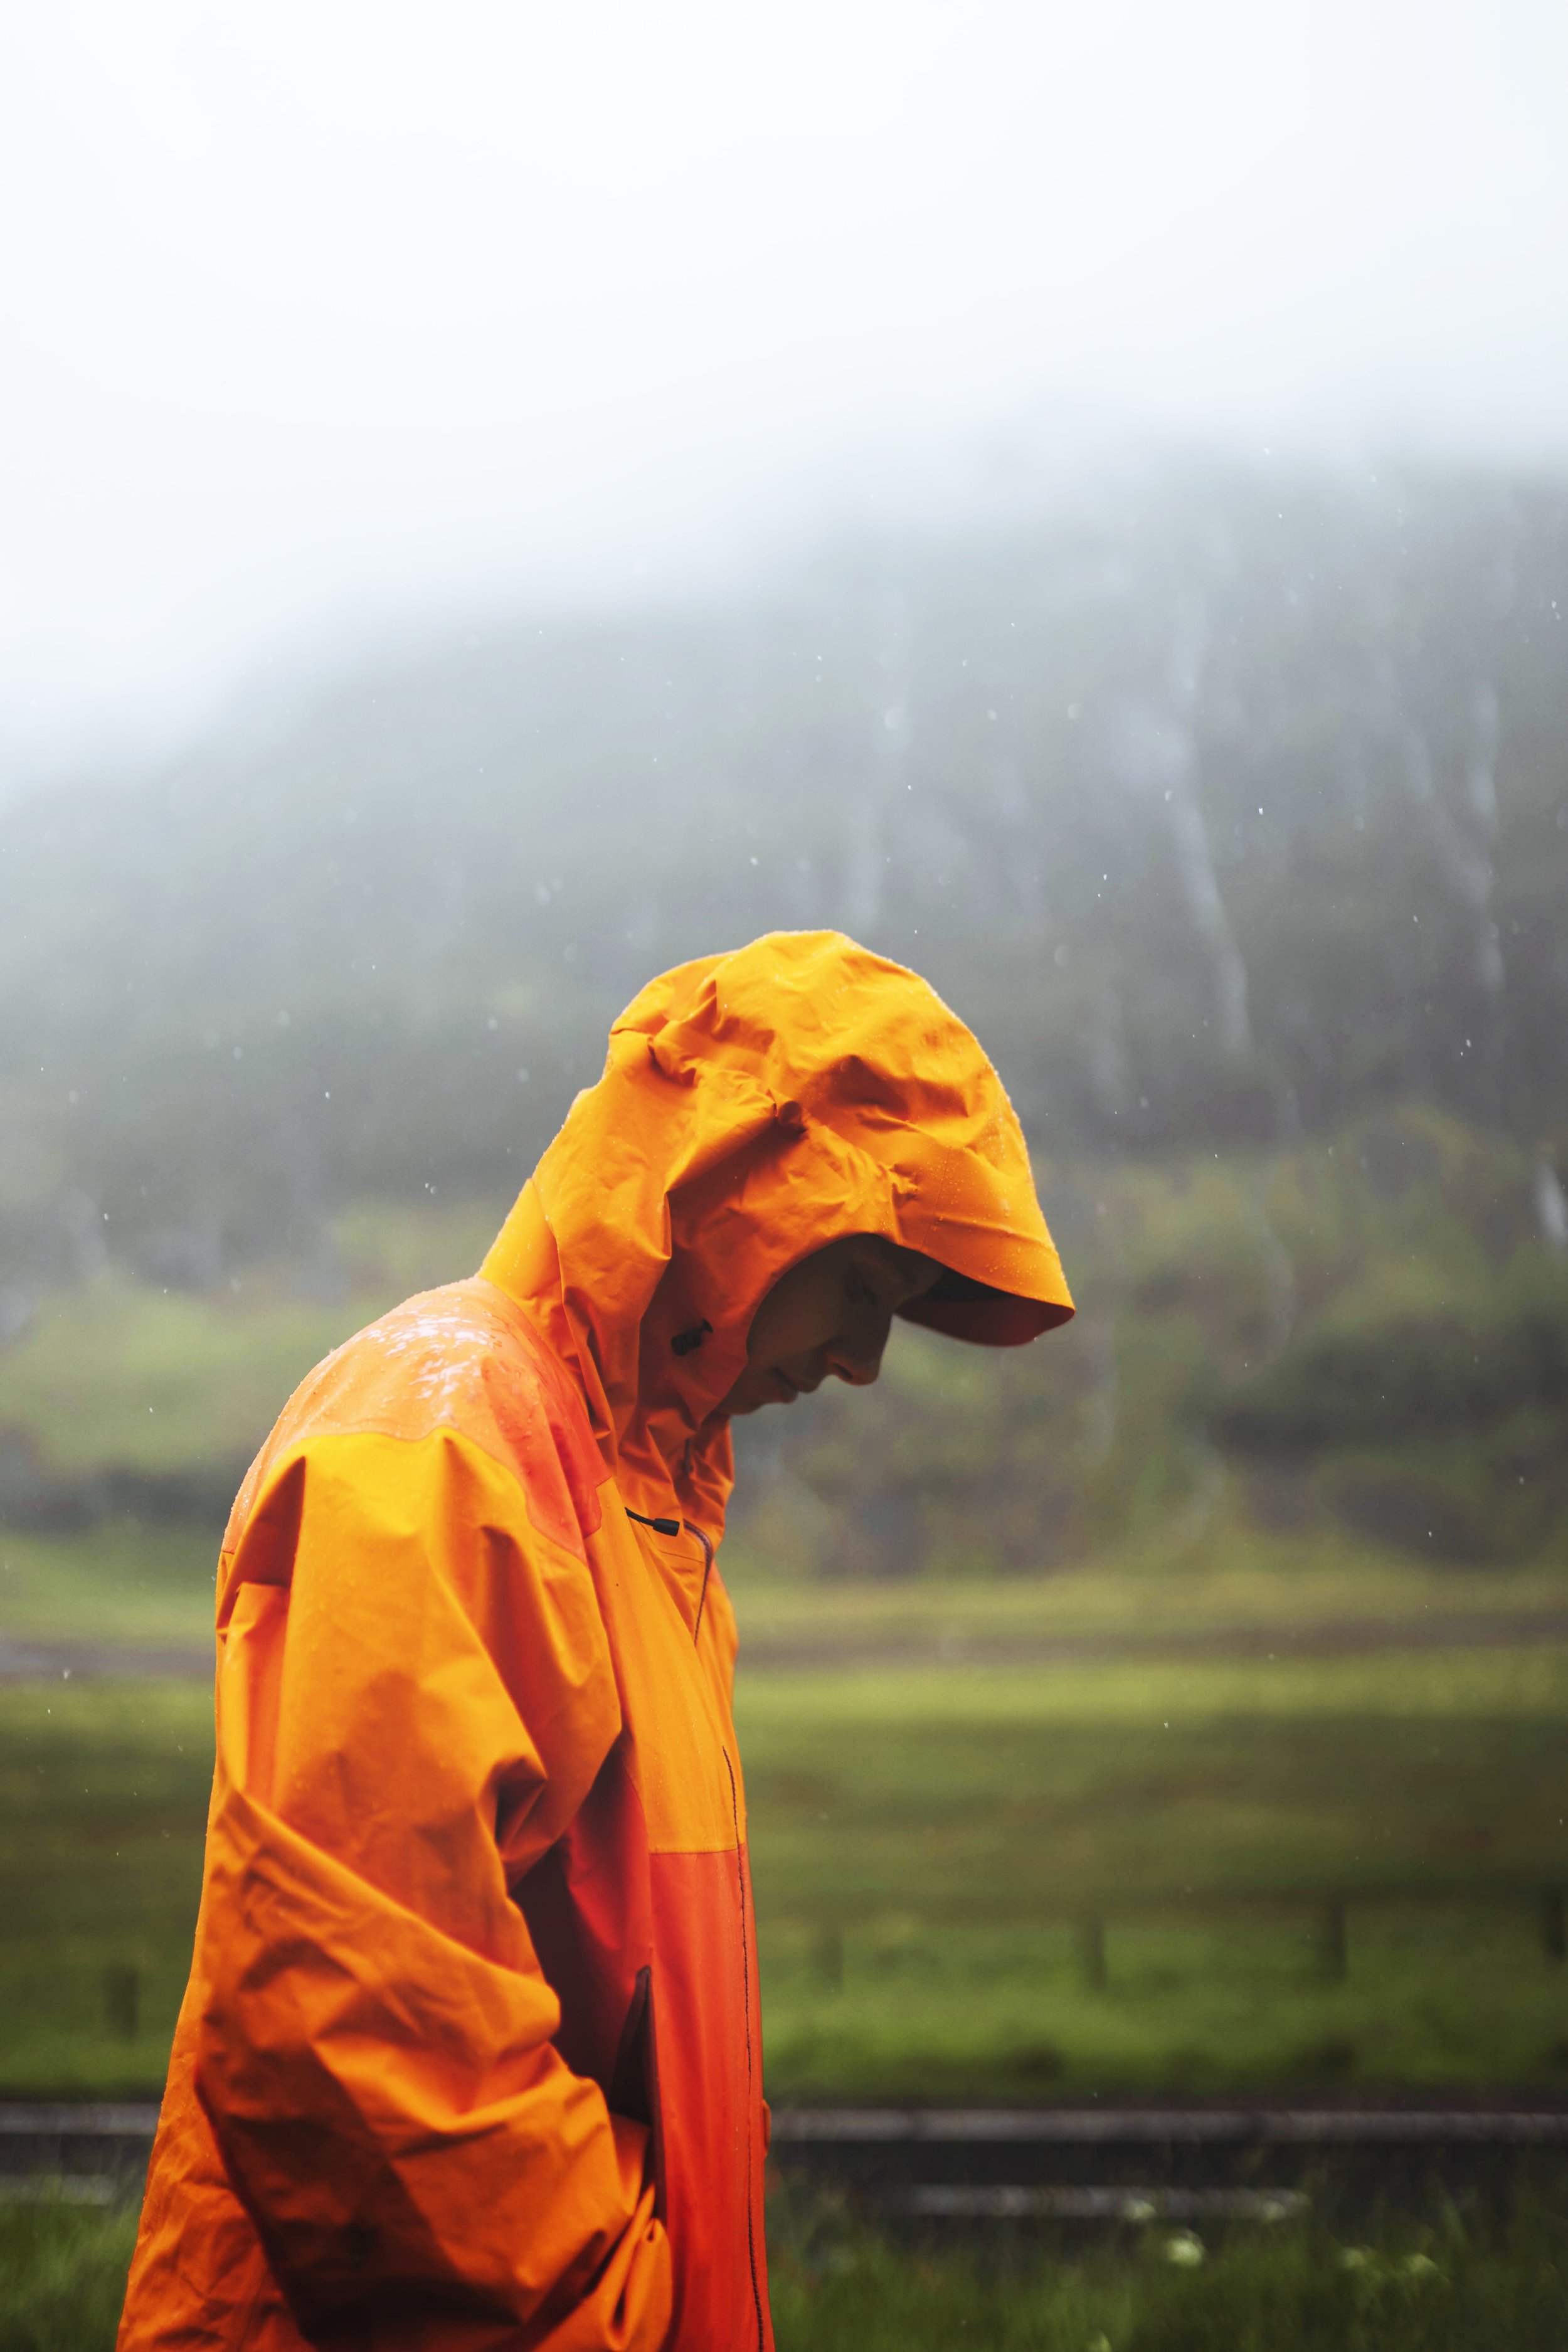 orange-raincoat-in-the-rain-2022-12-16-00-13-59-utc.jpg